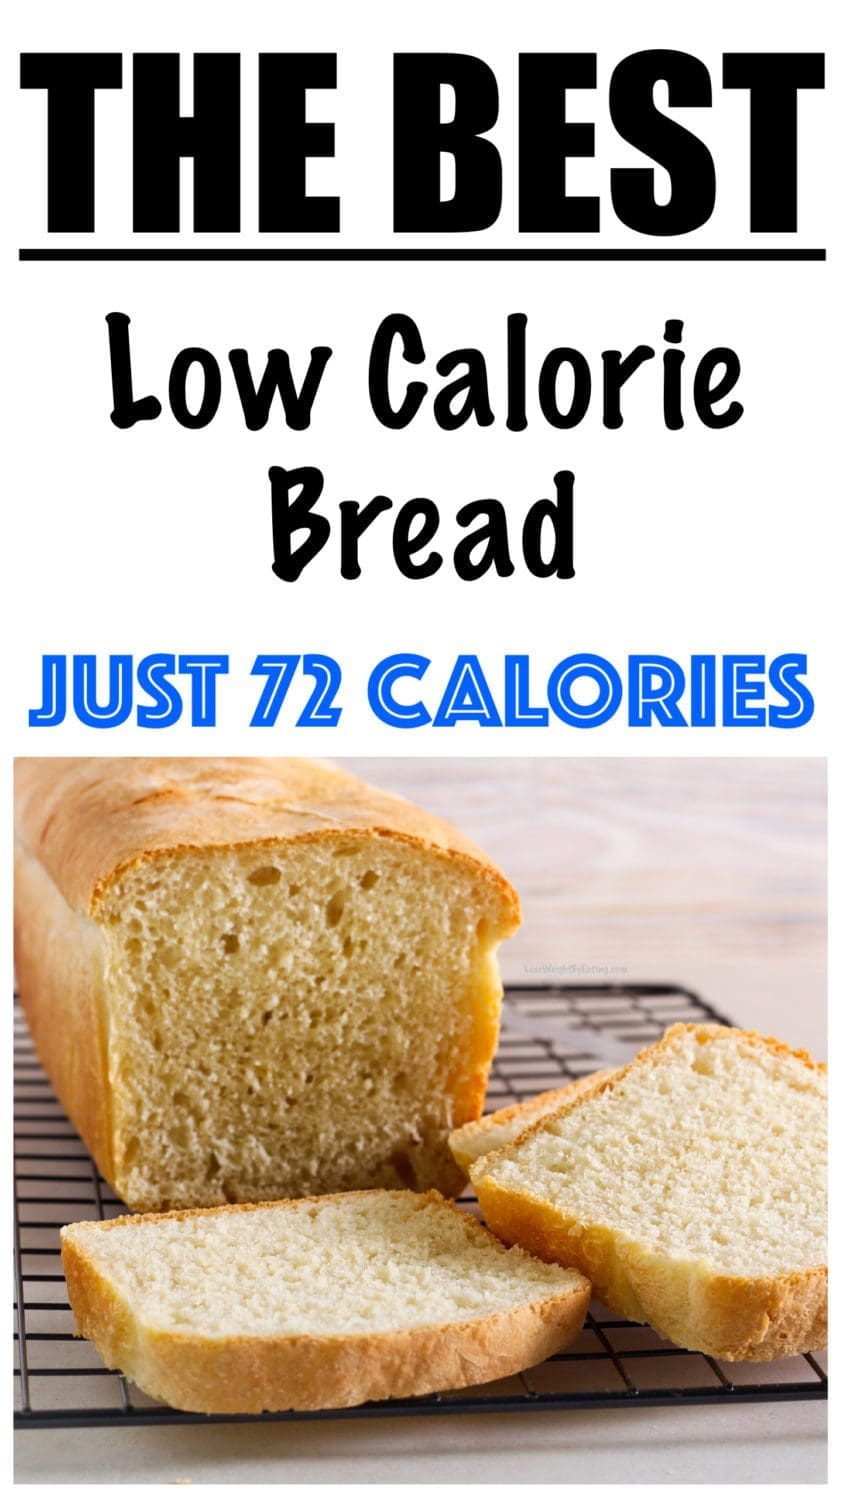 Low Calorie Bread Recipe